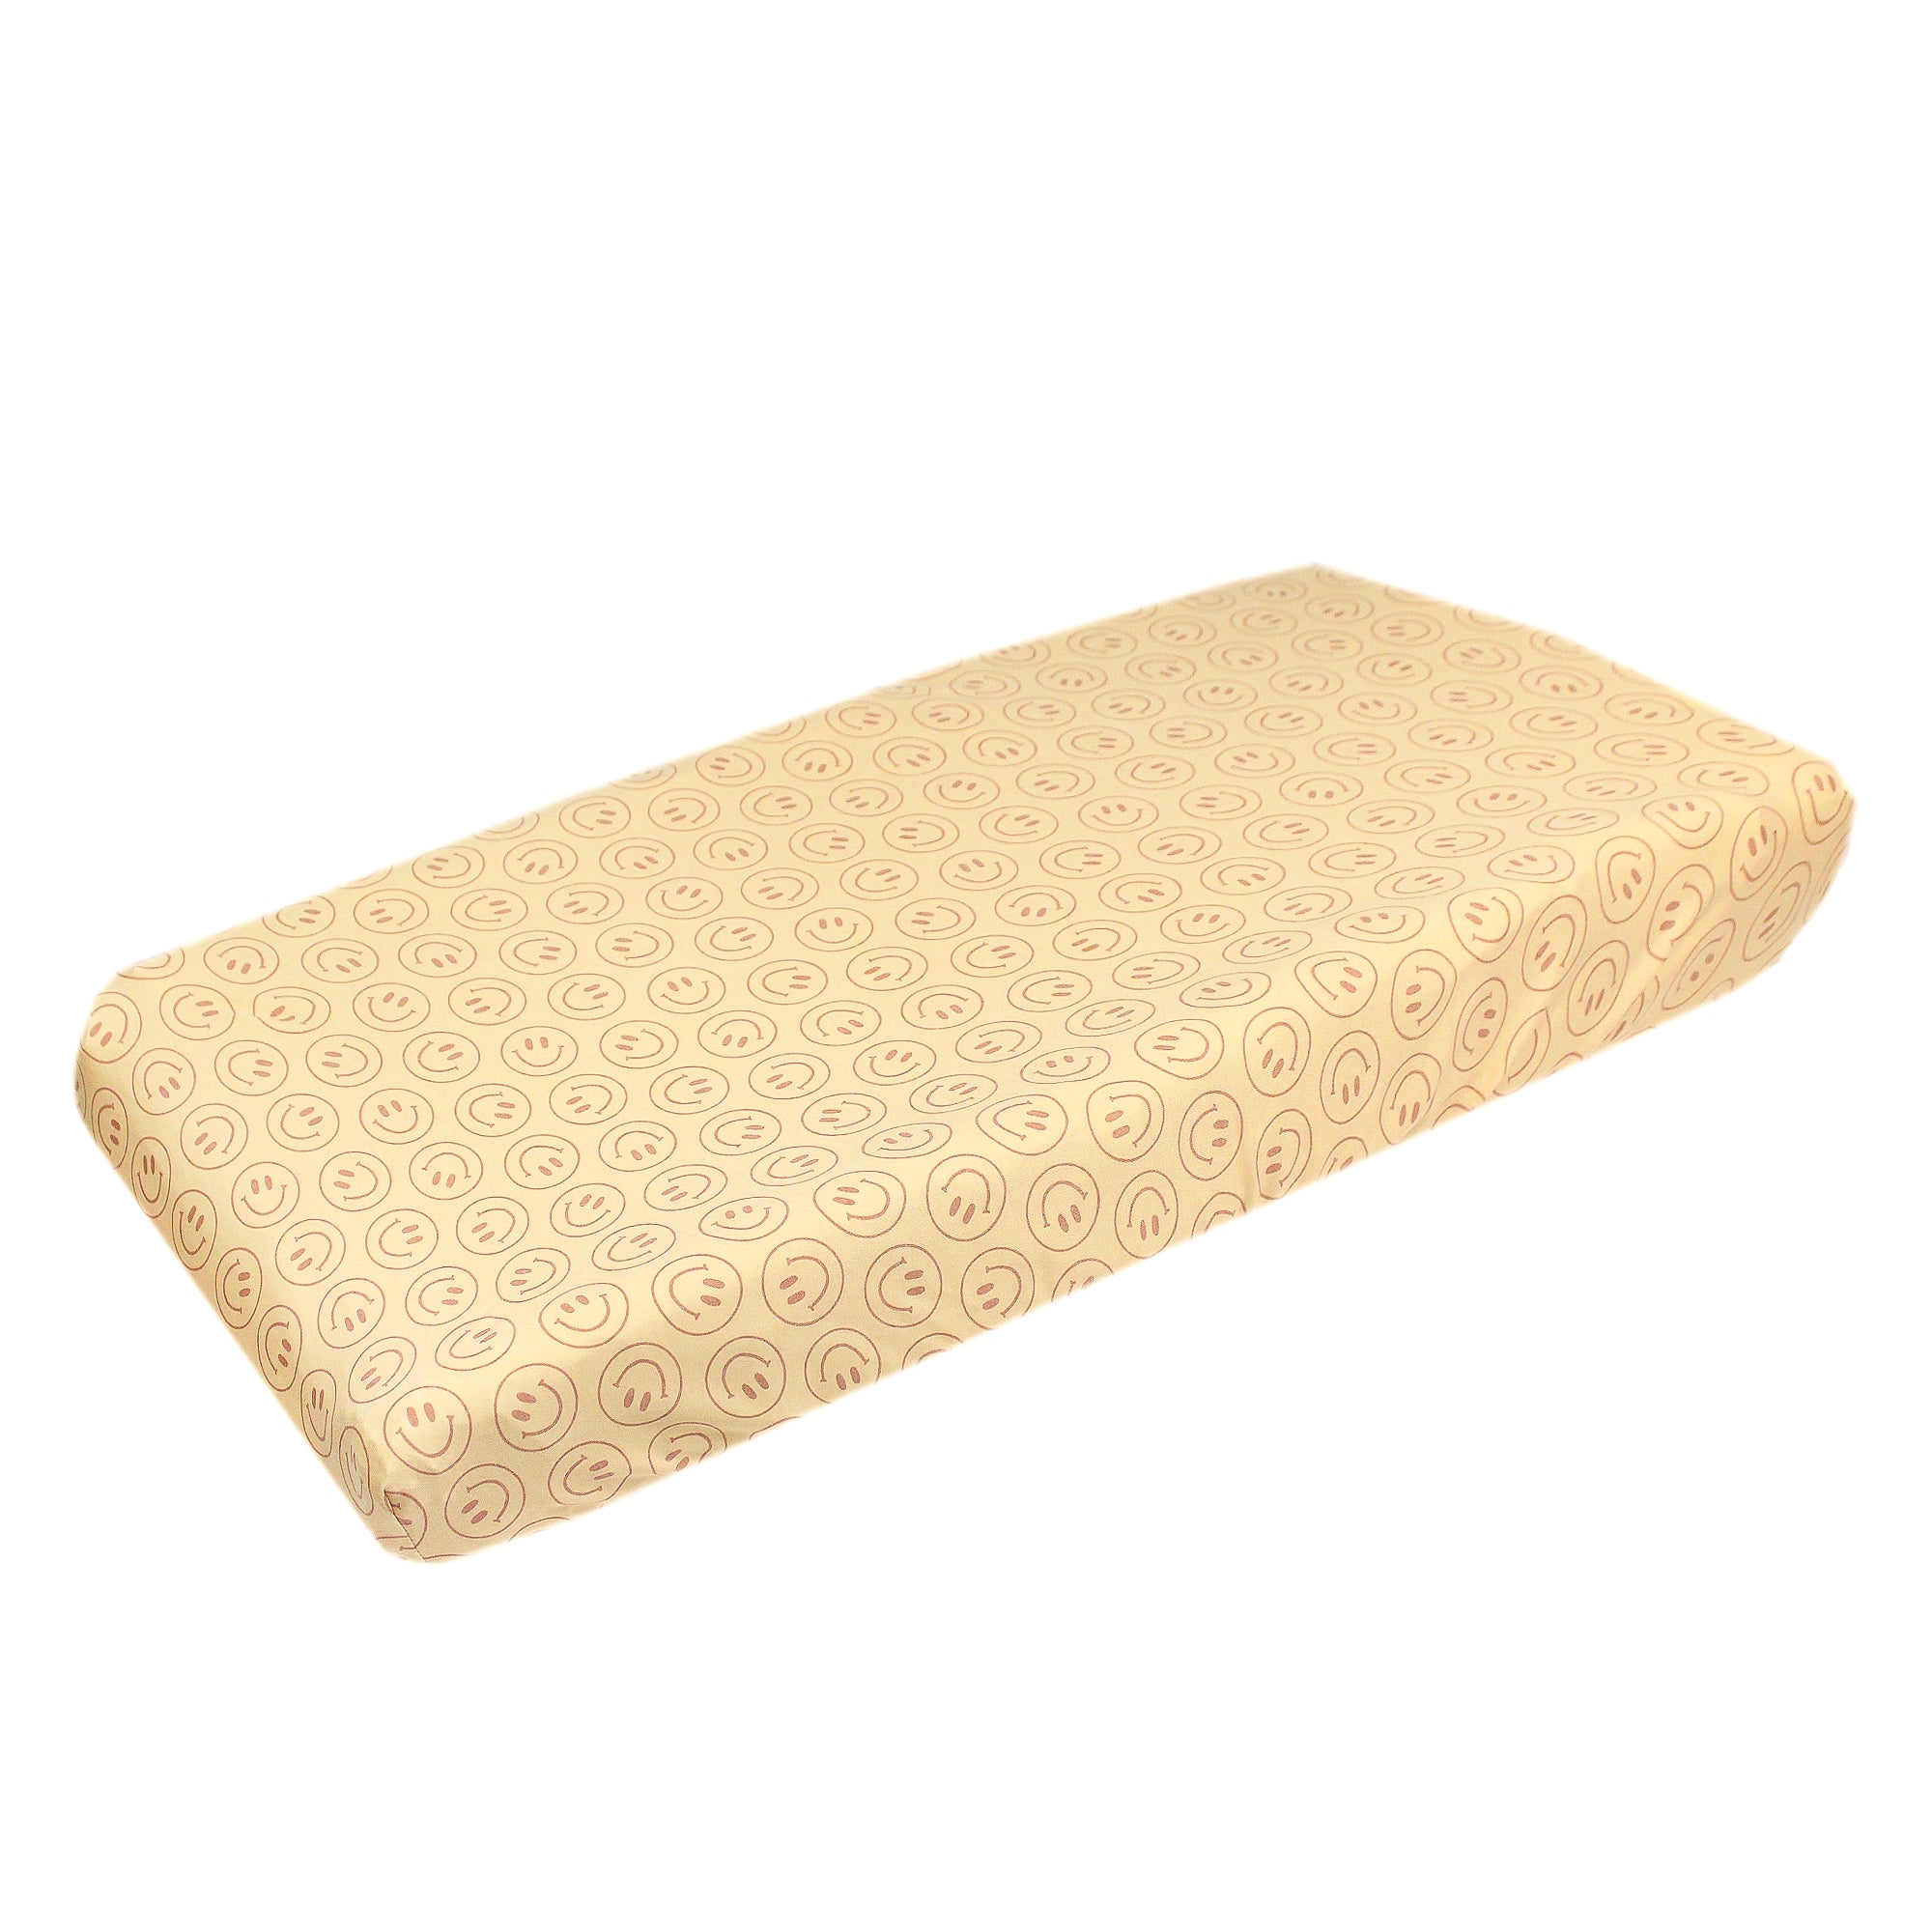 Premium Knit Diaper Changing Pad Cover - Vance